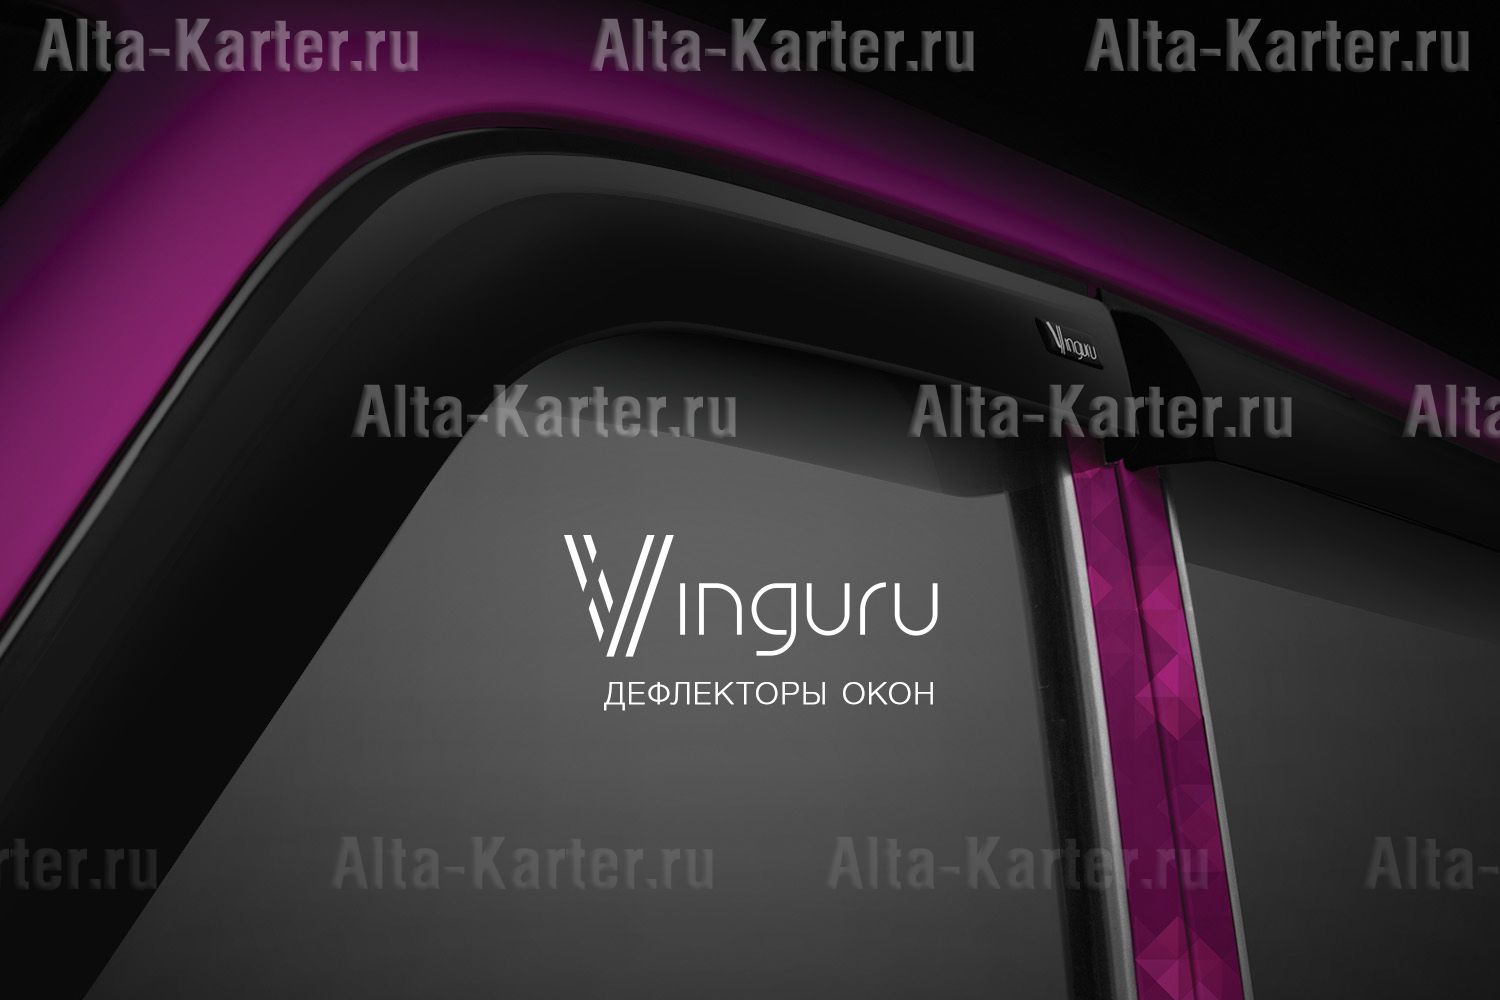 Дефлекторы Vinguru для окон Nissan Juke 2010-2014. Артикул AFV29810